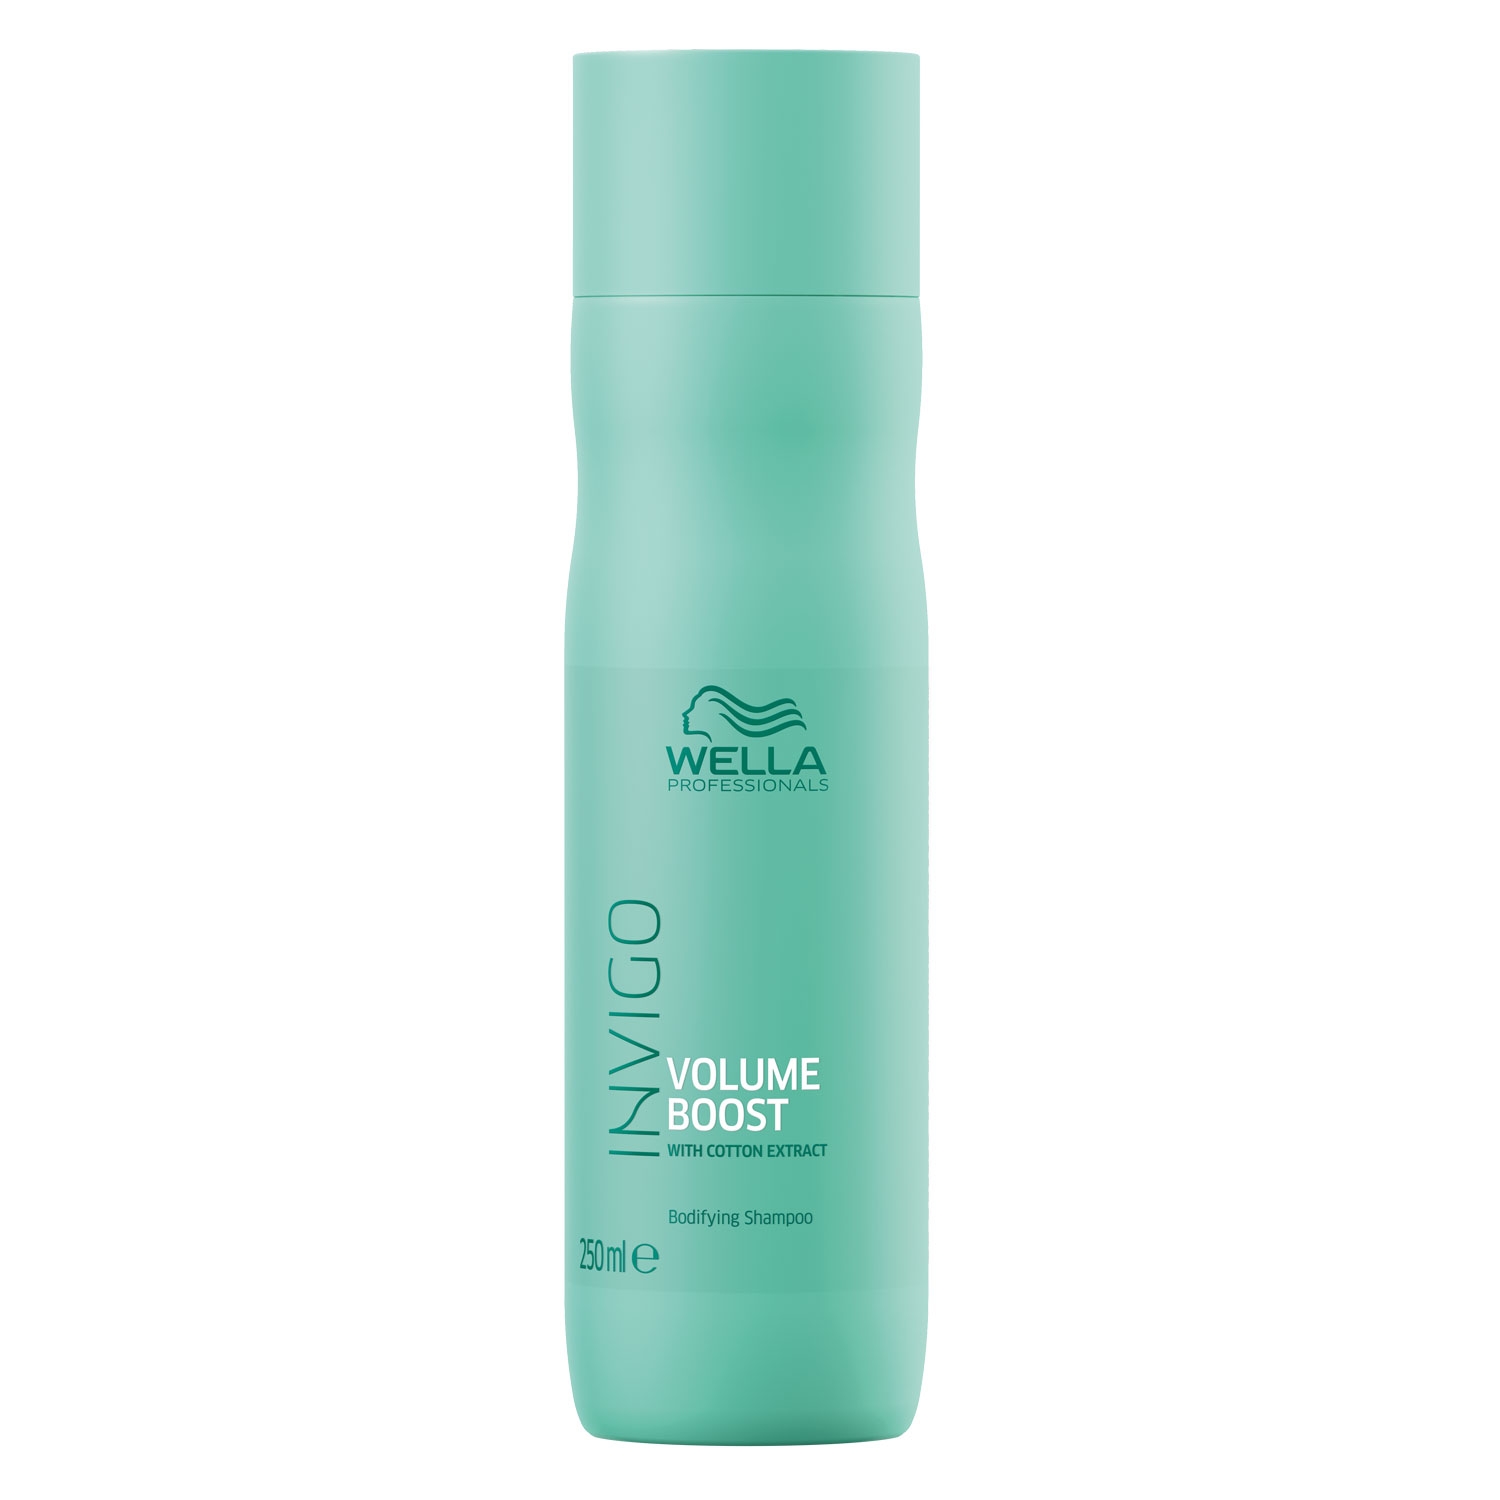 Produktbild von Invigo Volume Boost - Bodifying Shampoo